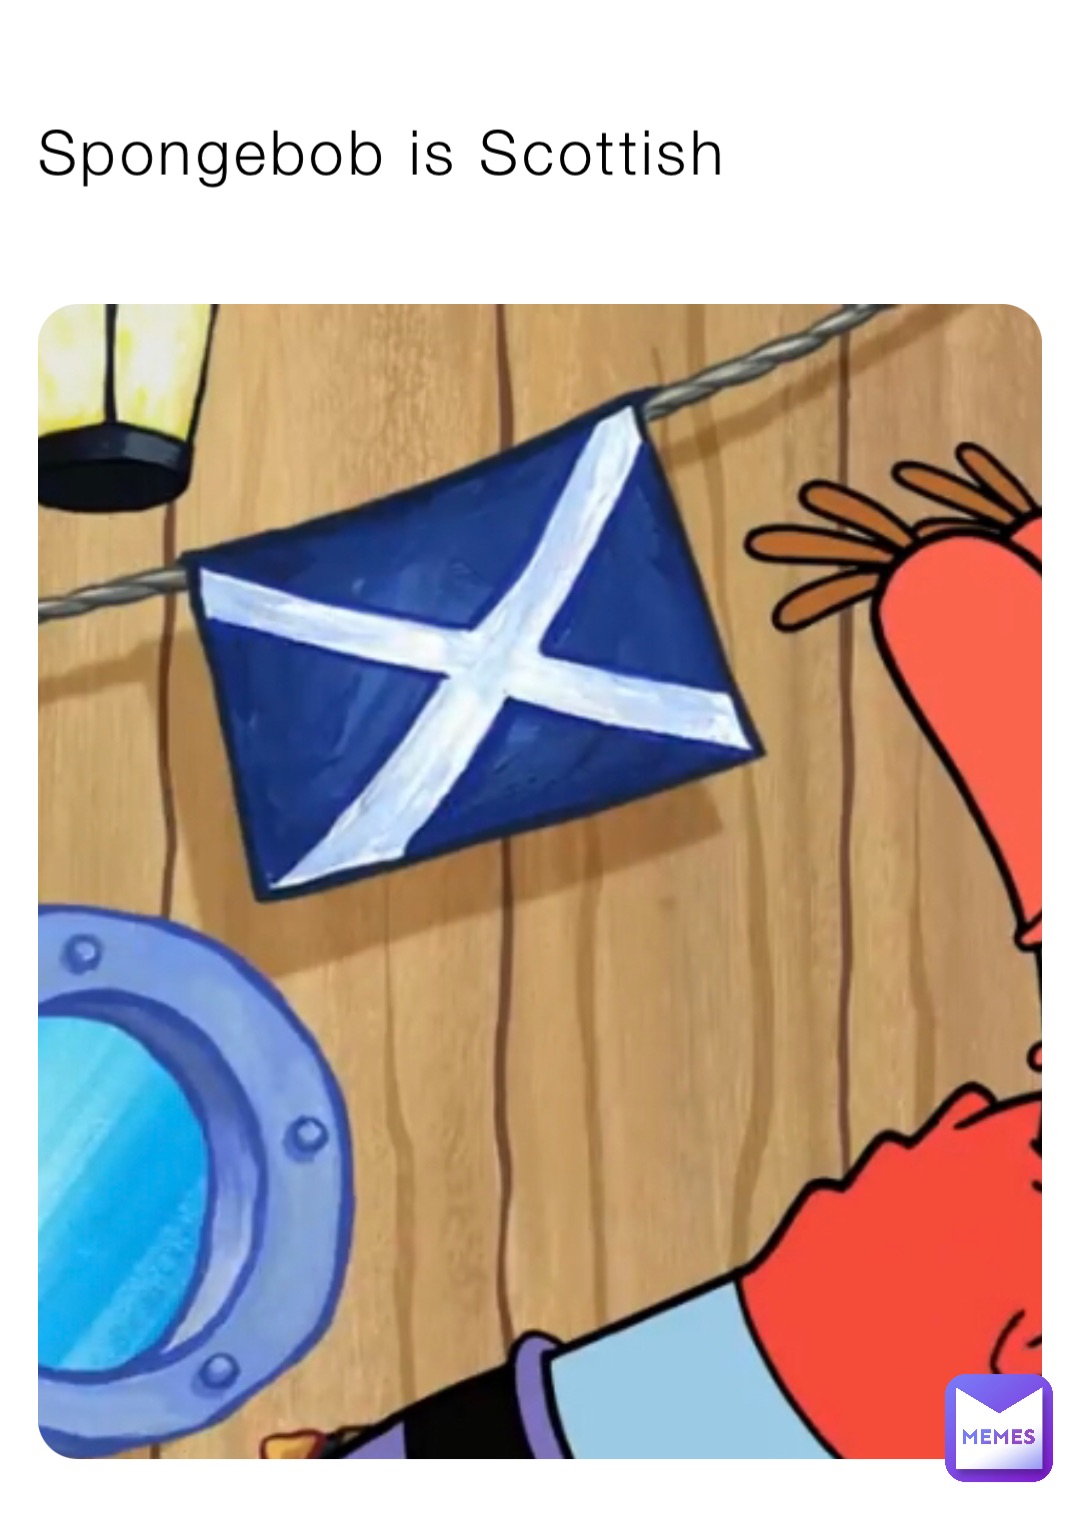 Spongebob is Scottish